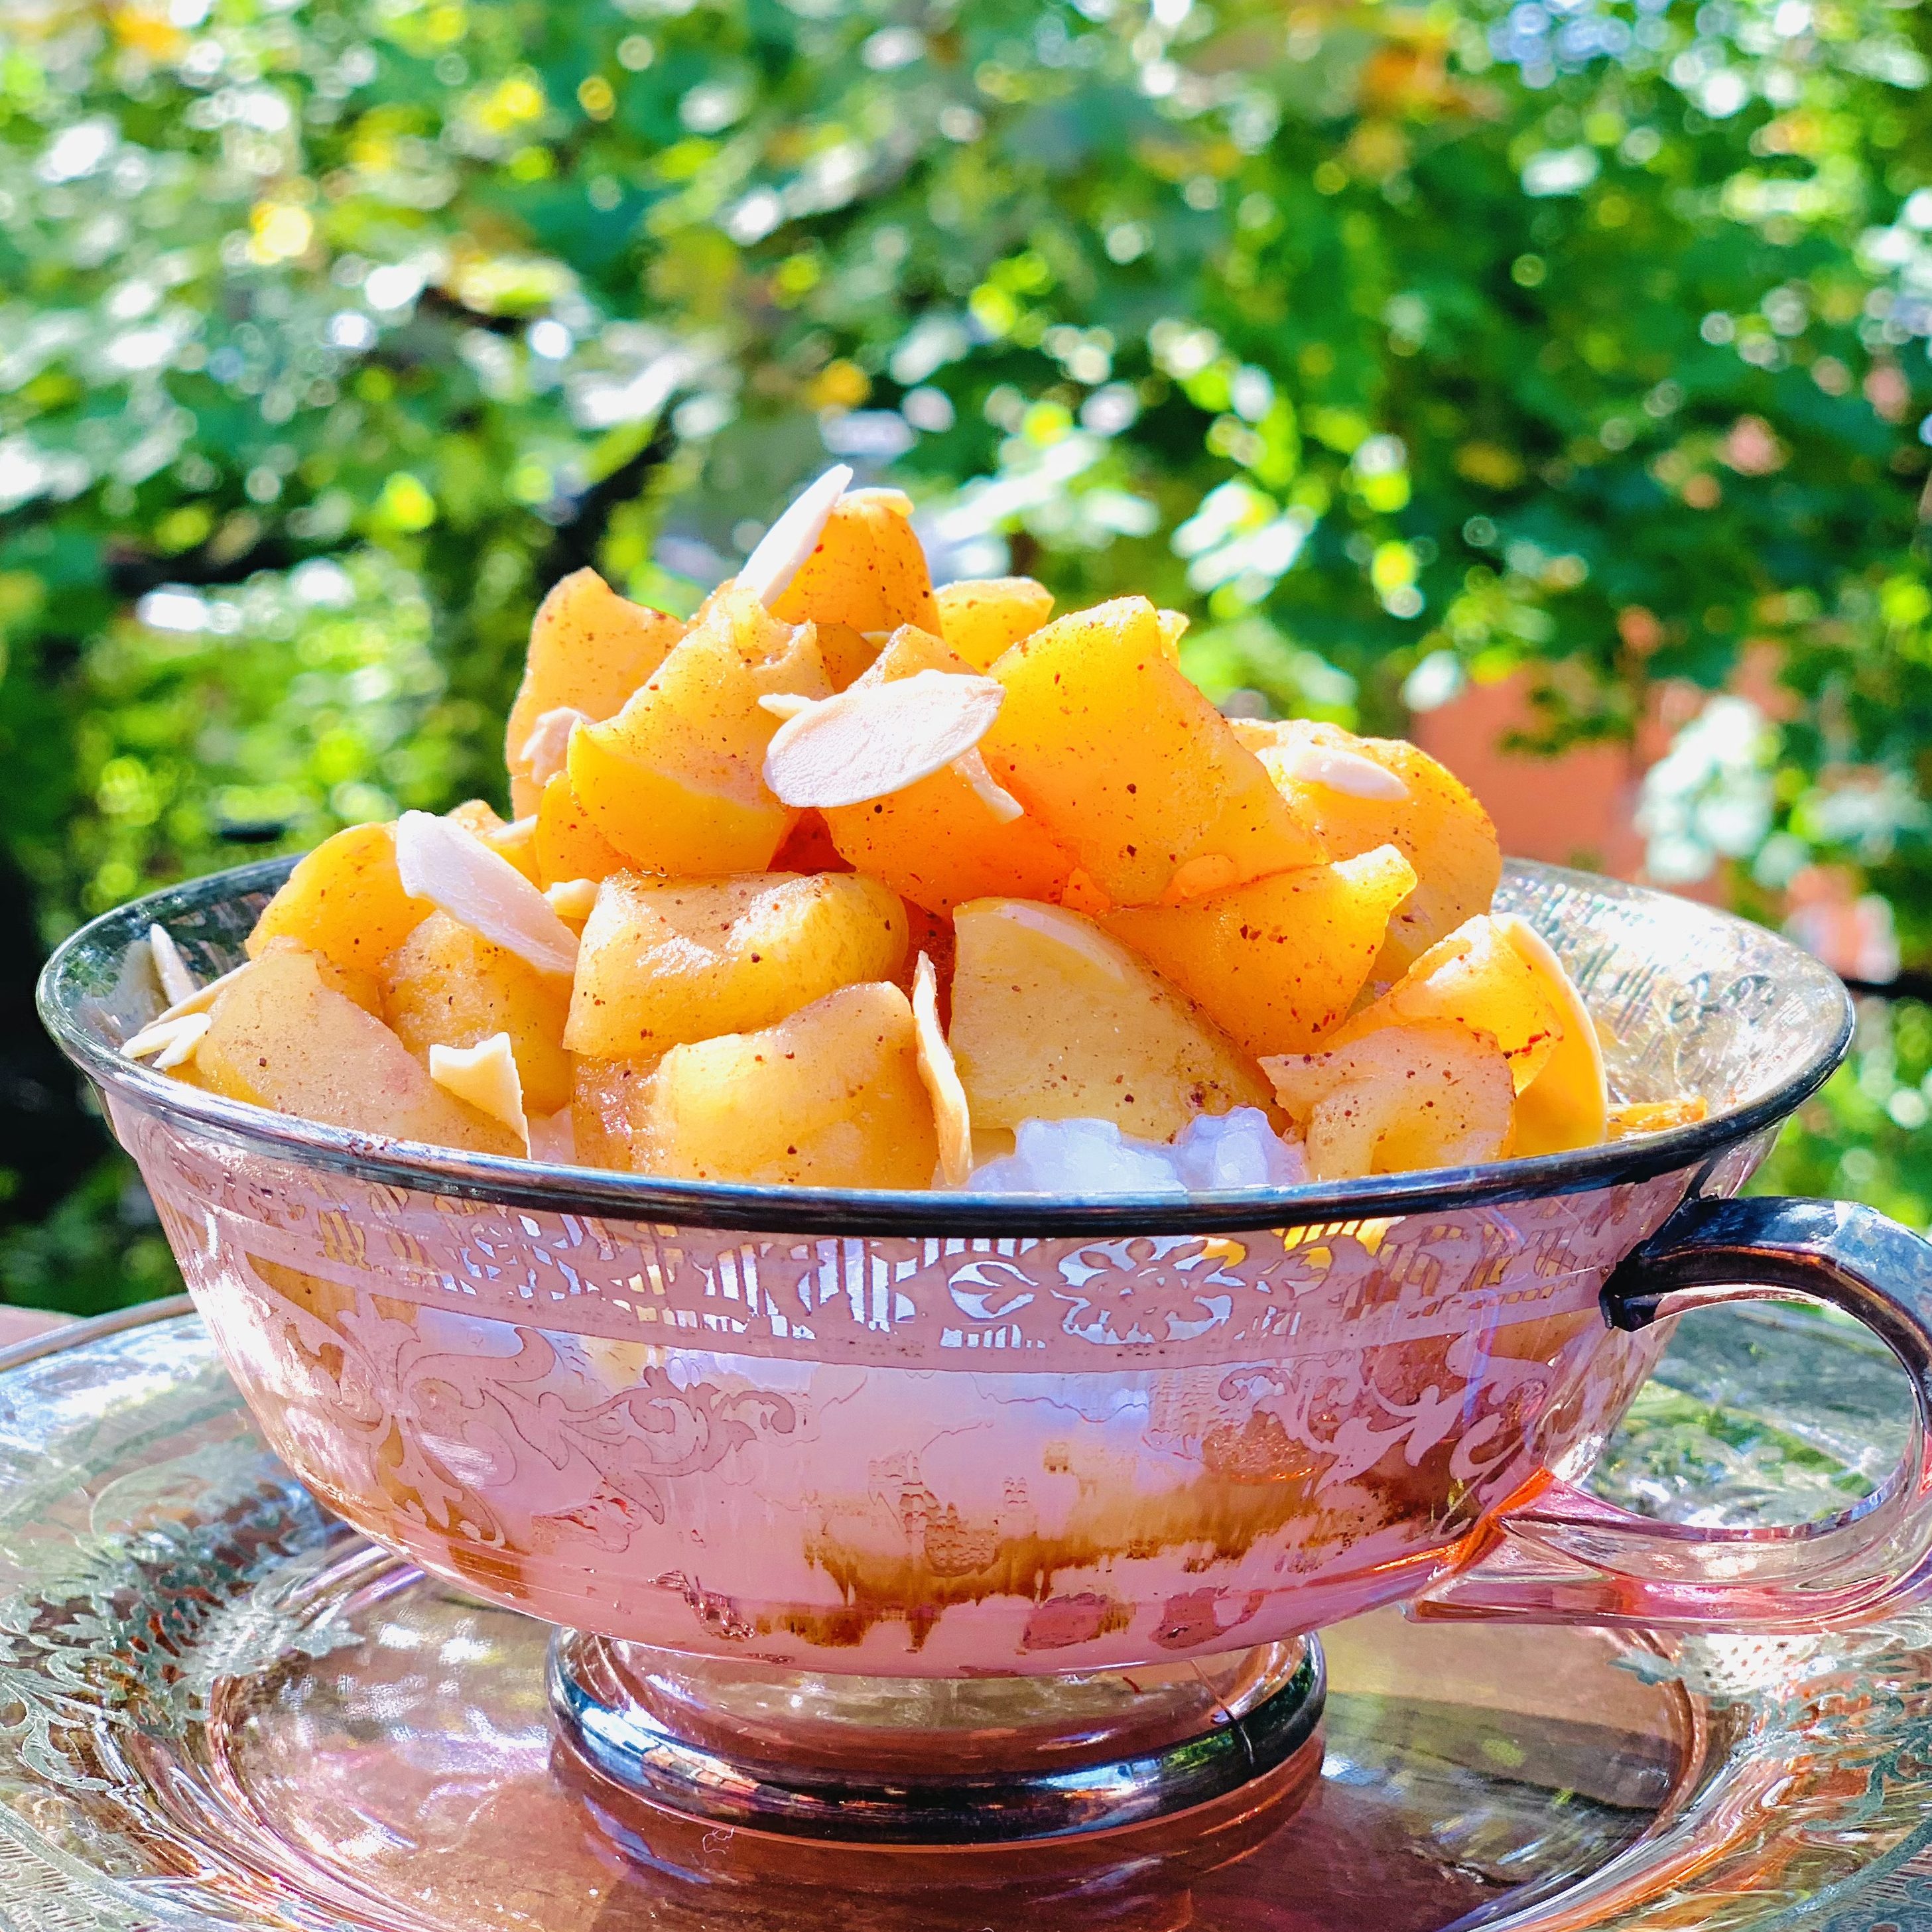 brown-rice-porridge-caremelized-apples-pears